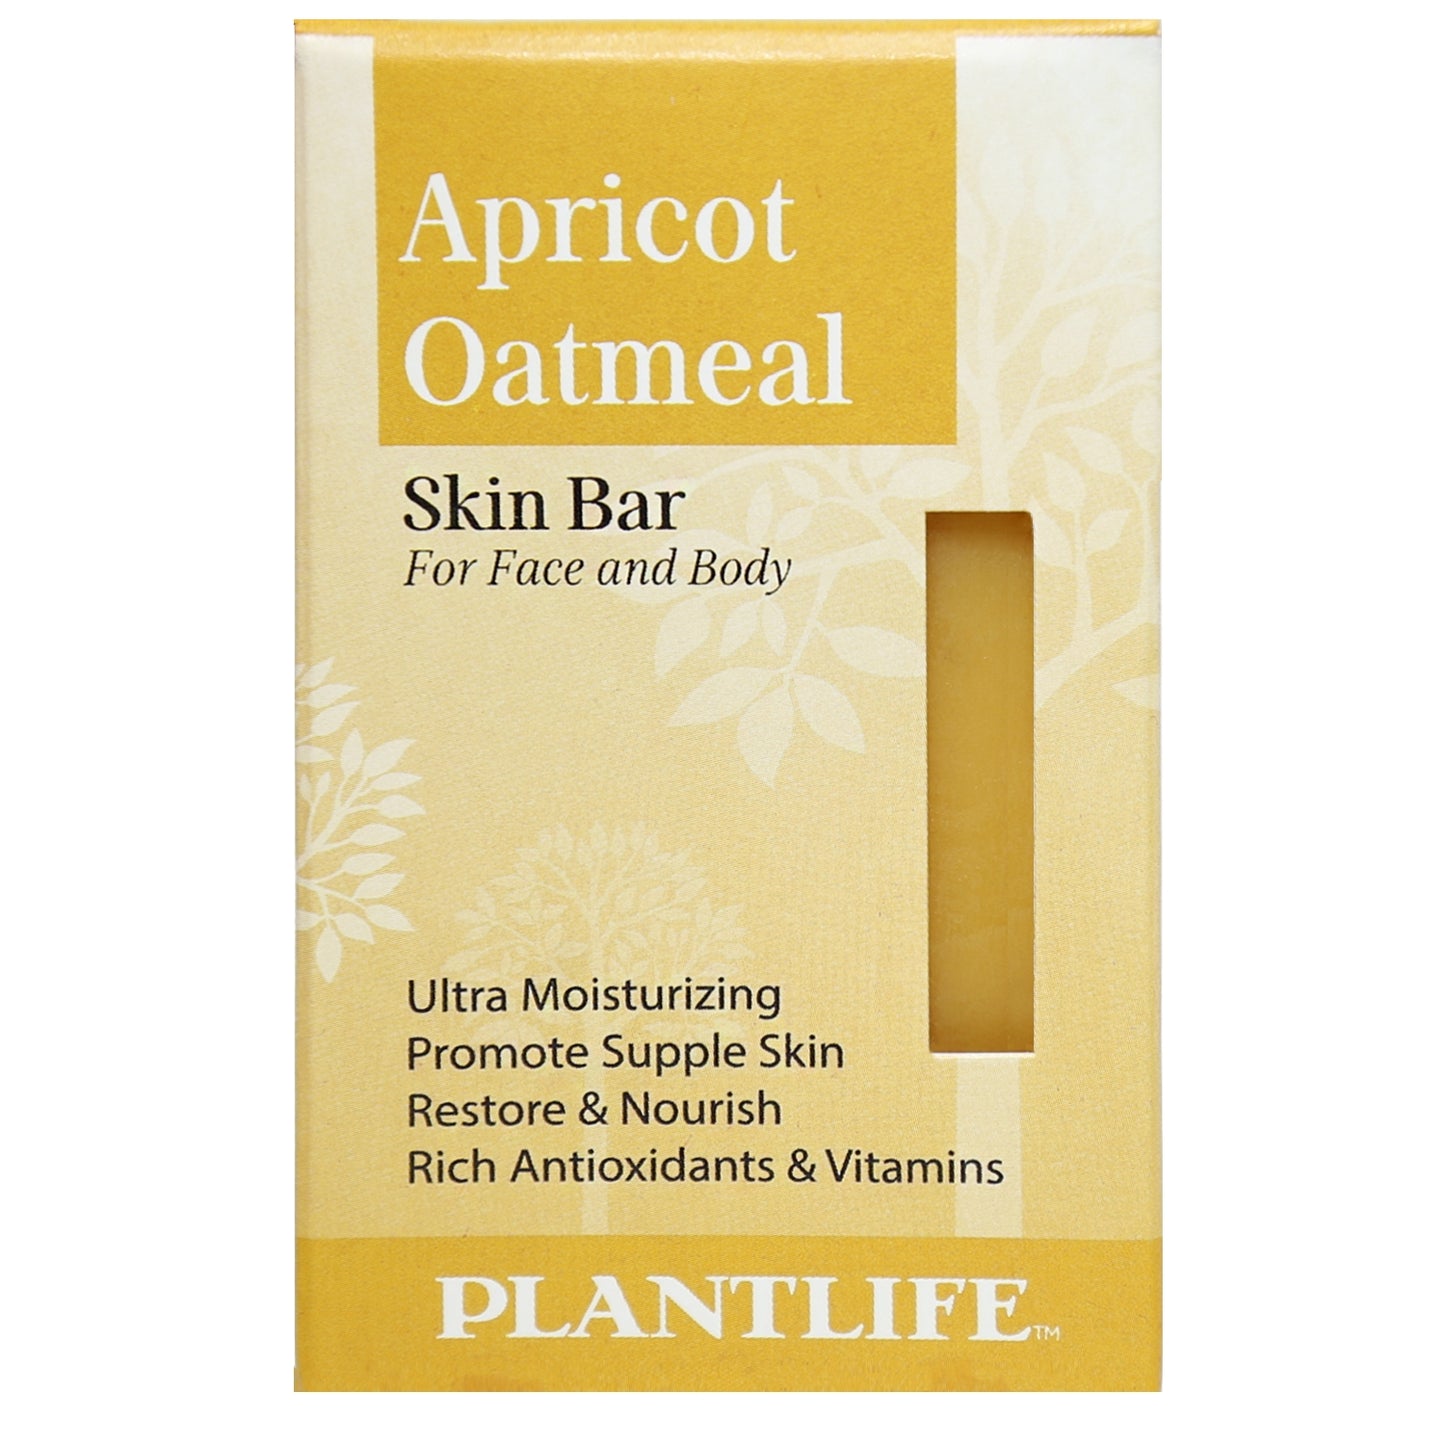 Apricot Oatmeal Skin Bar Sample